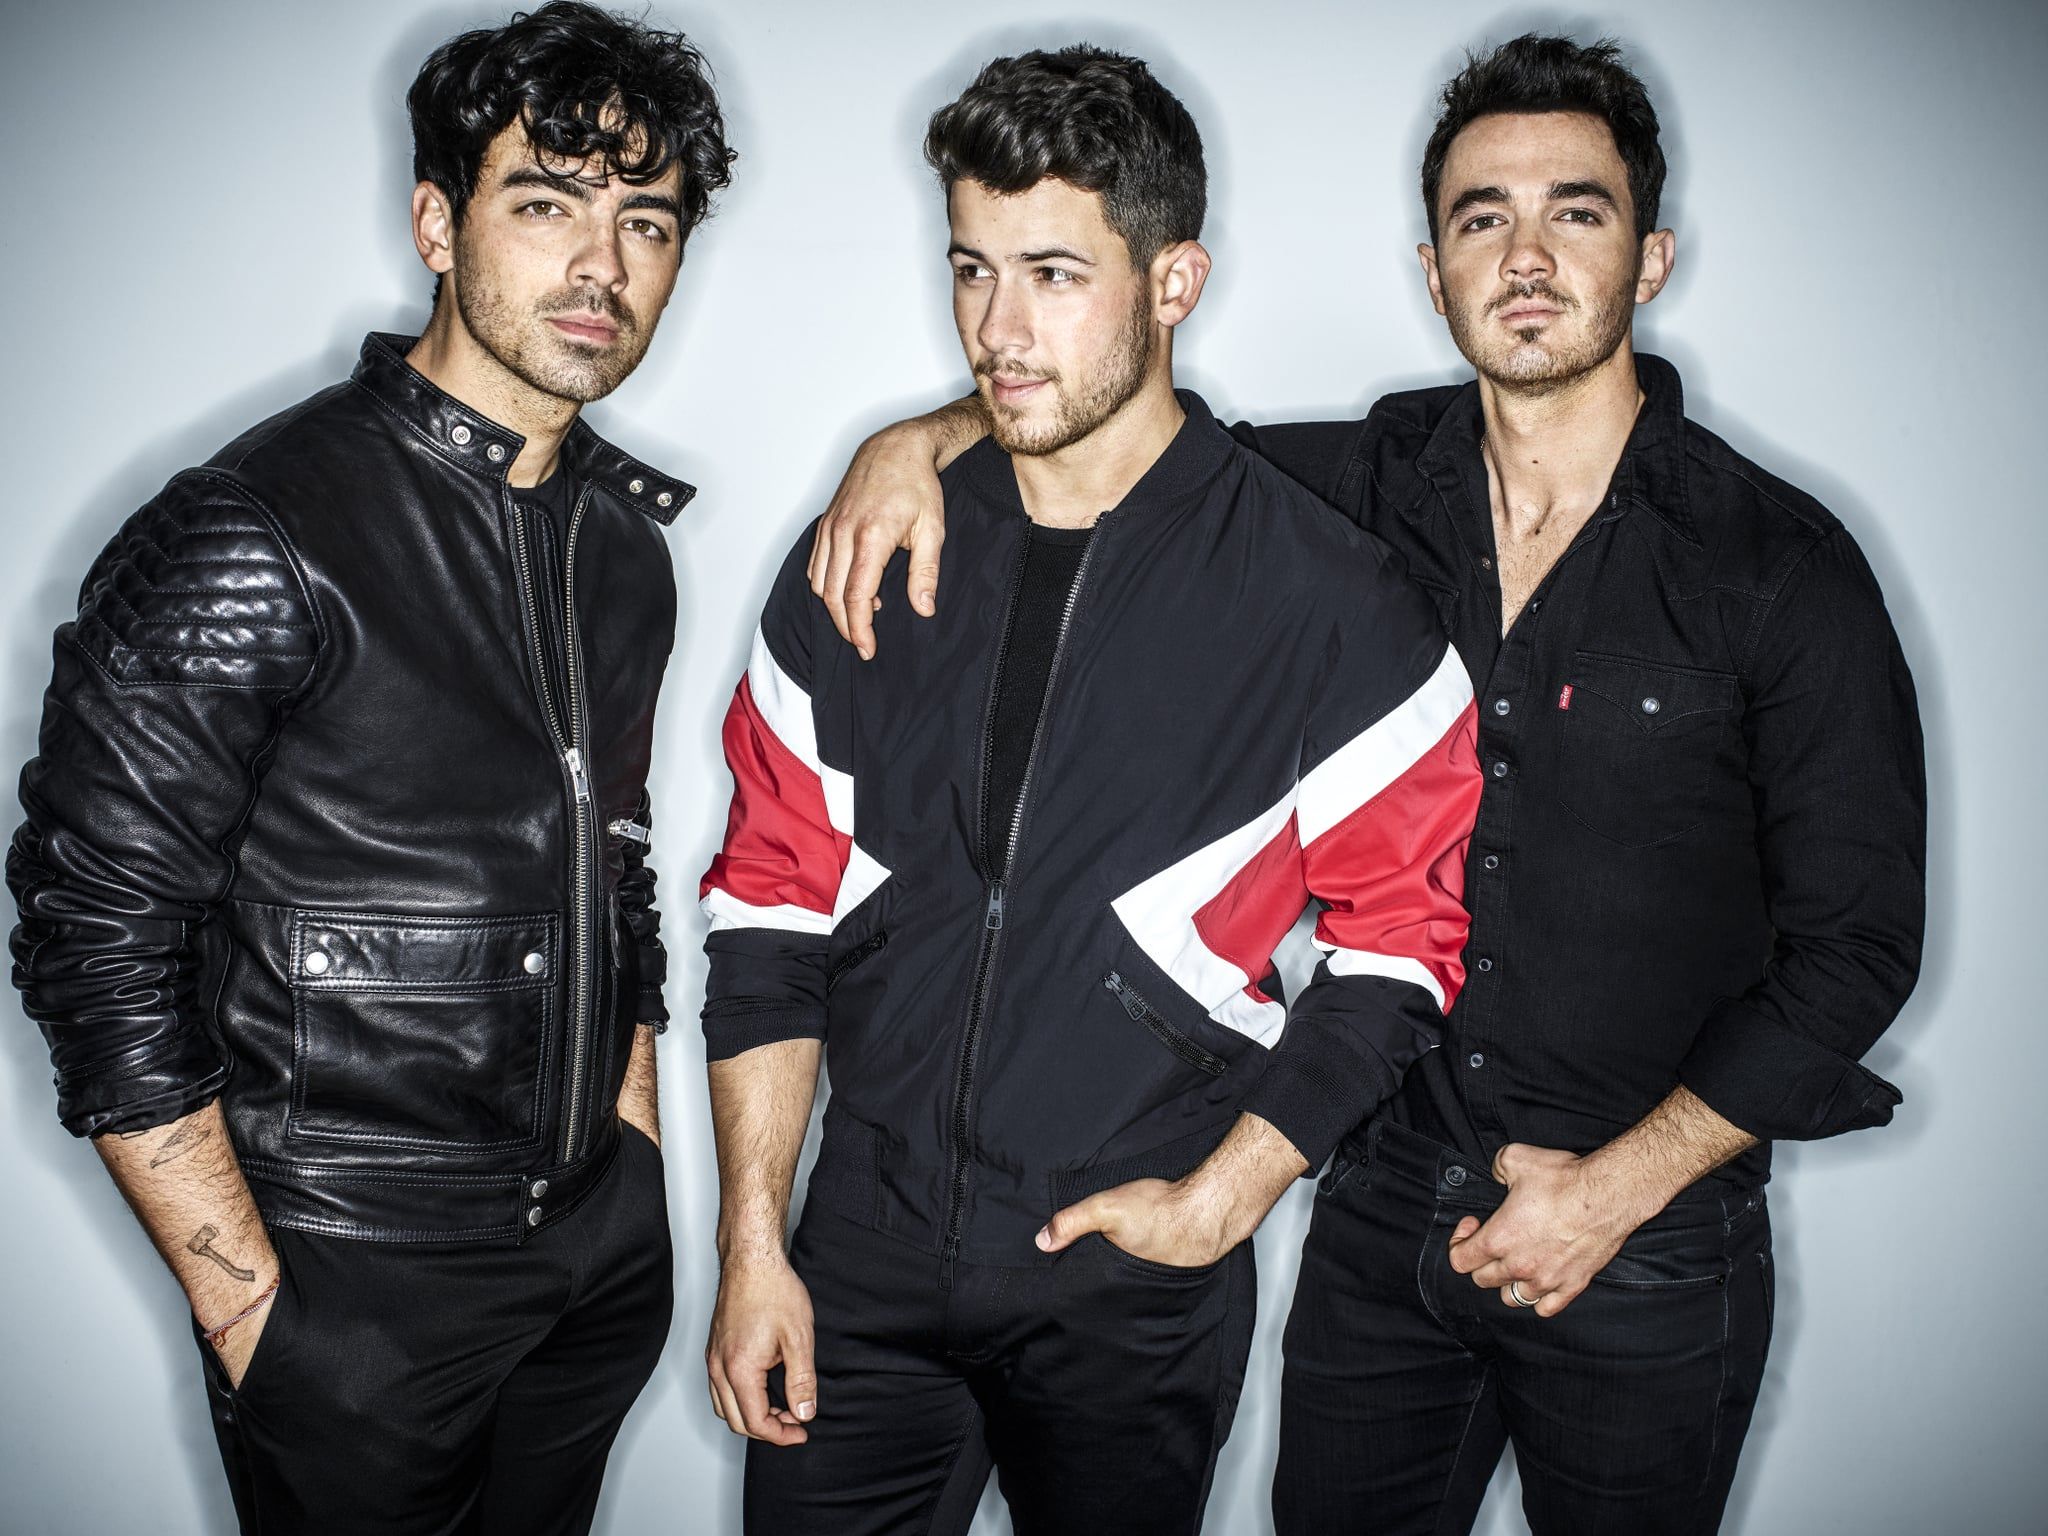 Jonas Brothers Amazon Documentary Details